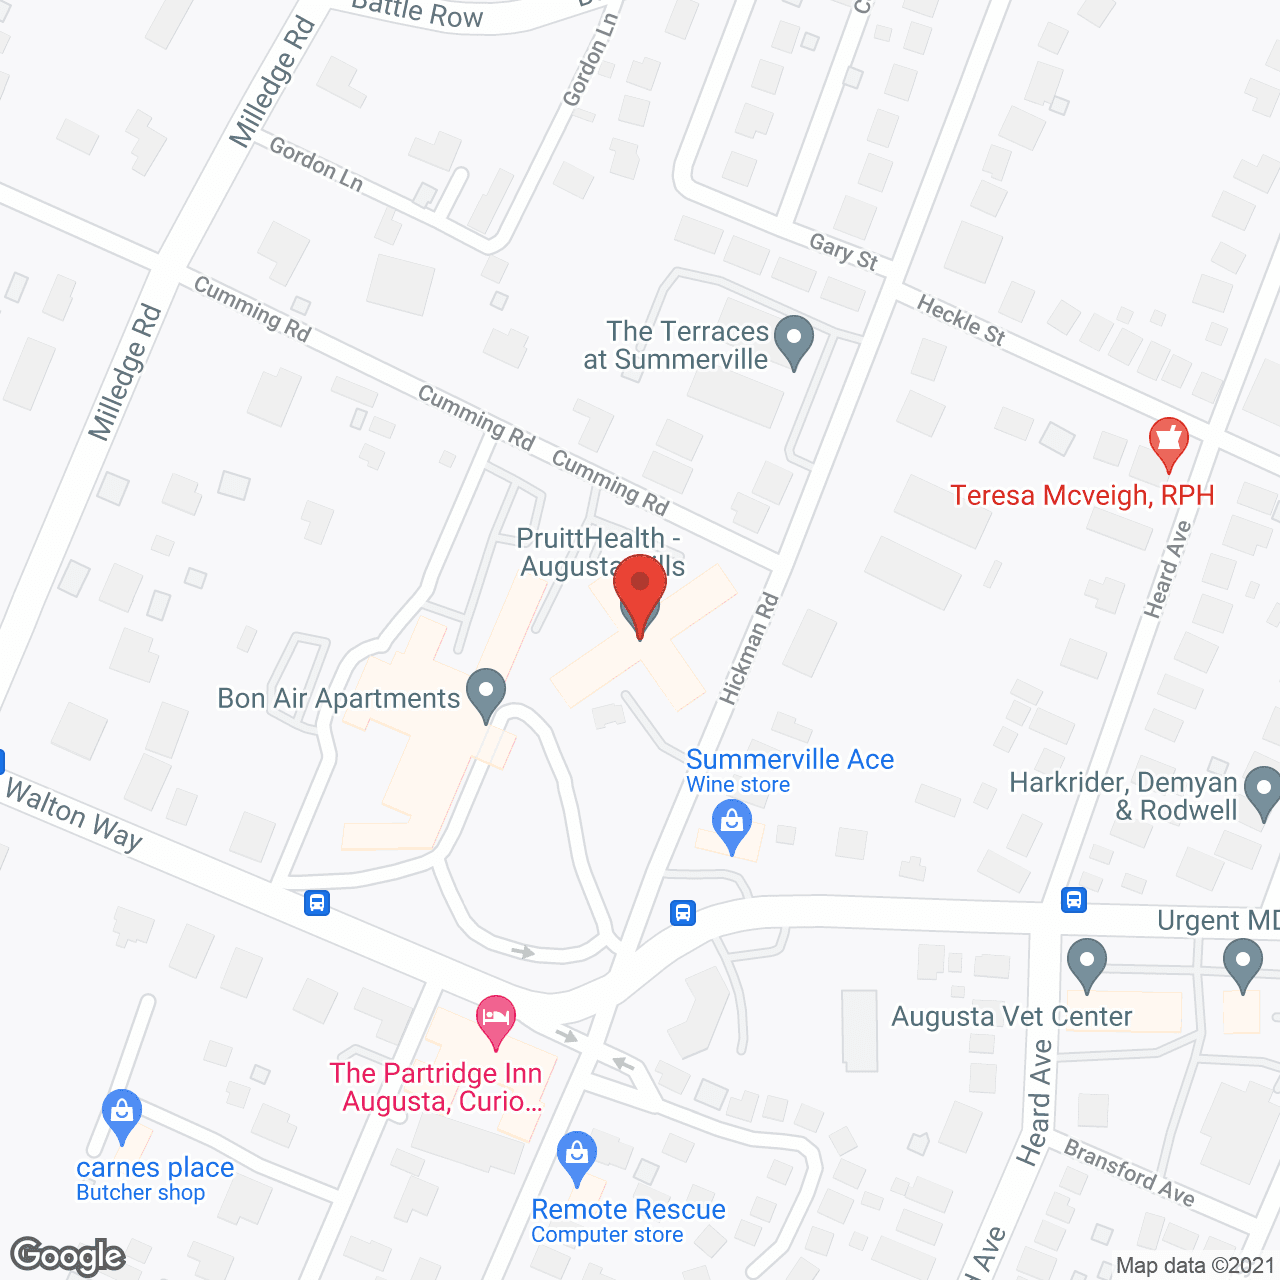 PruitHealth - Augusta Hills in google map